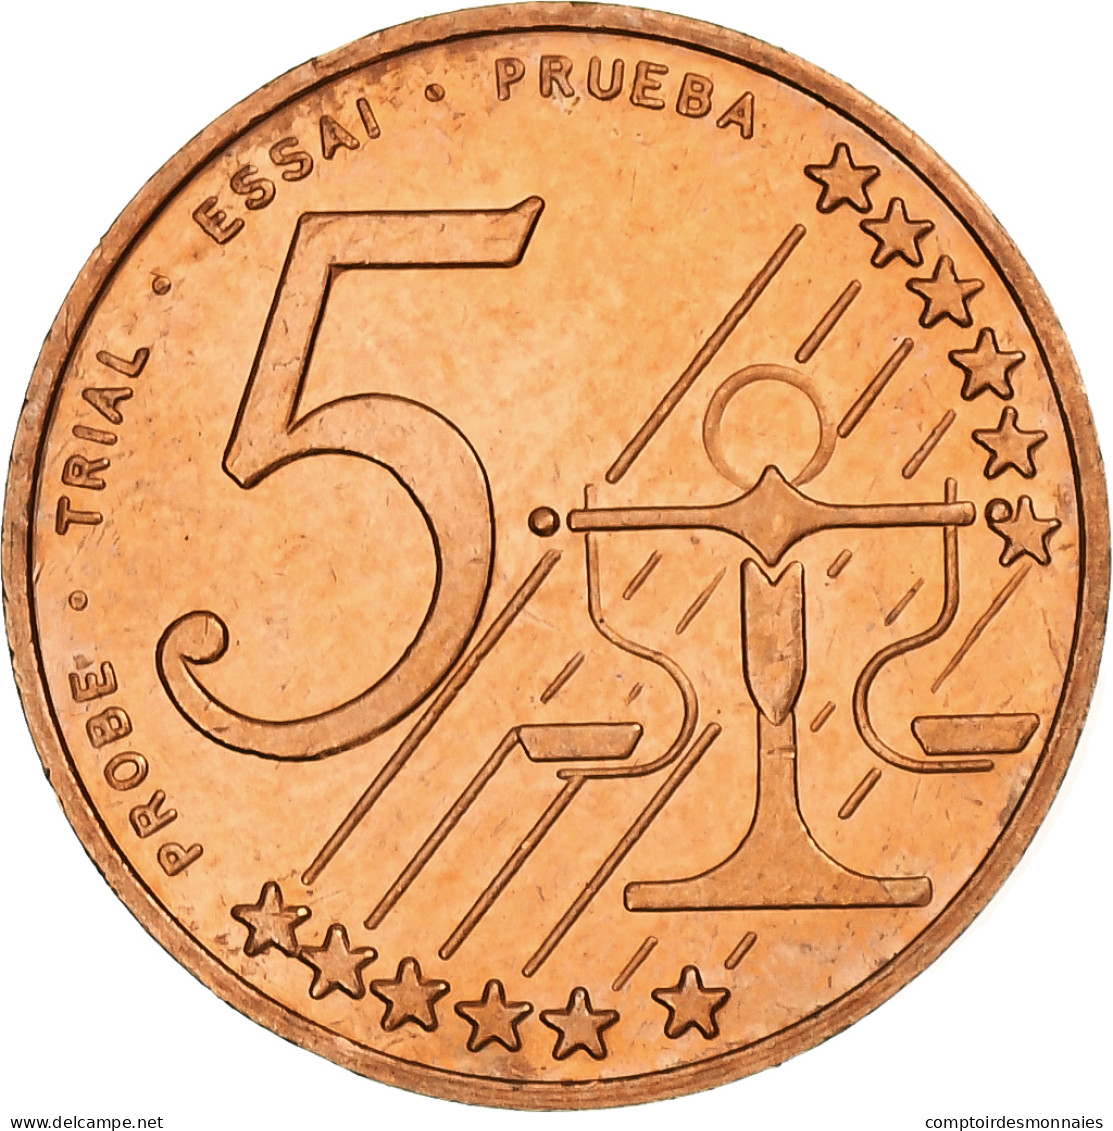 Estonie, 5 Euro Cent, Fantasy Euro Patterns, Essai-Trial, BE, 2004, Cuivre, FDC - Privatentwürfe